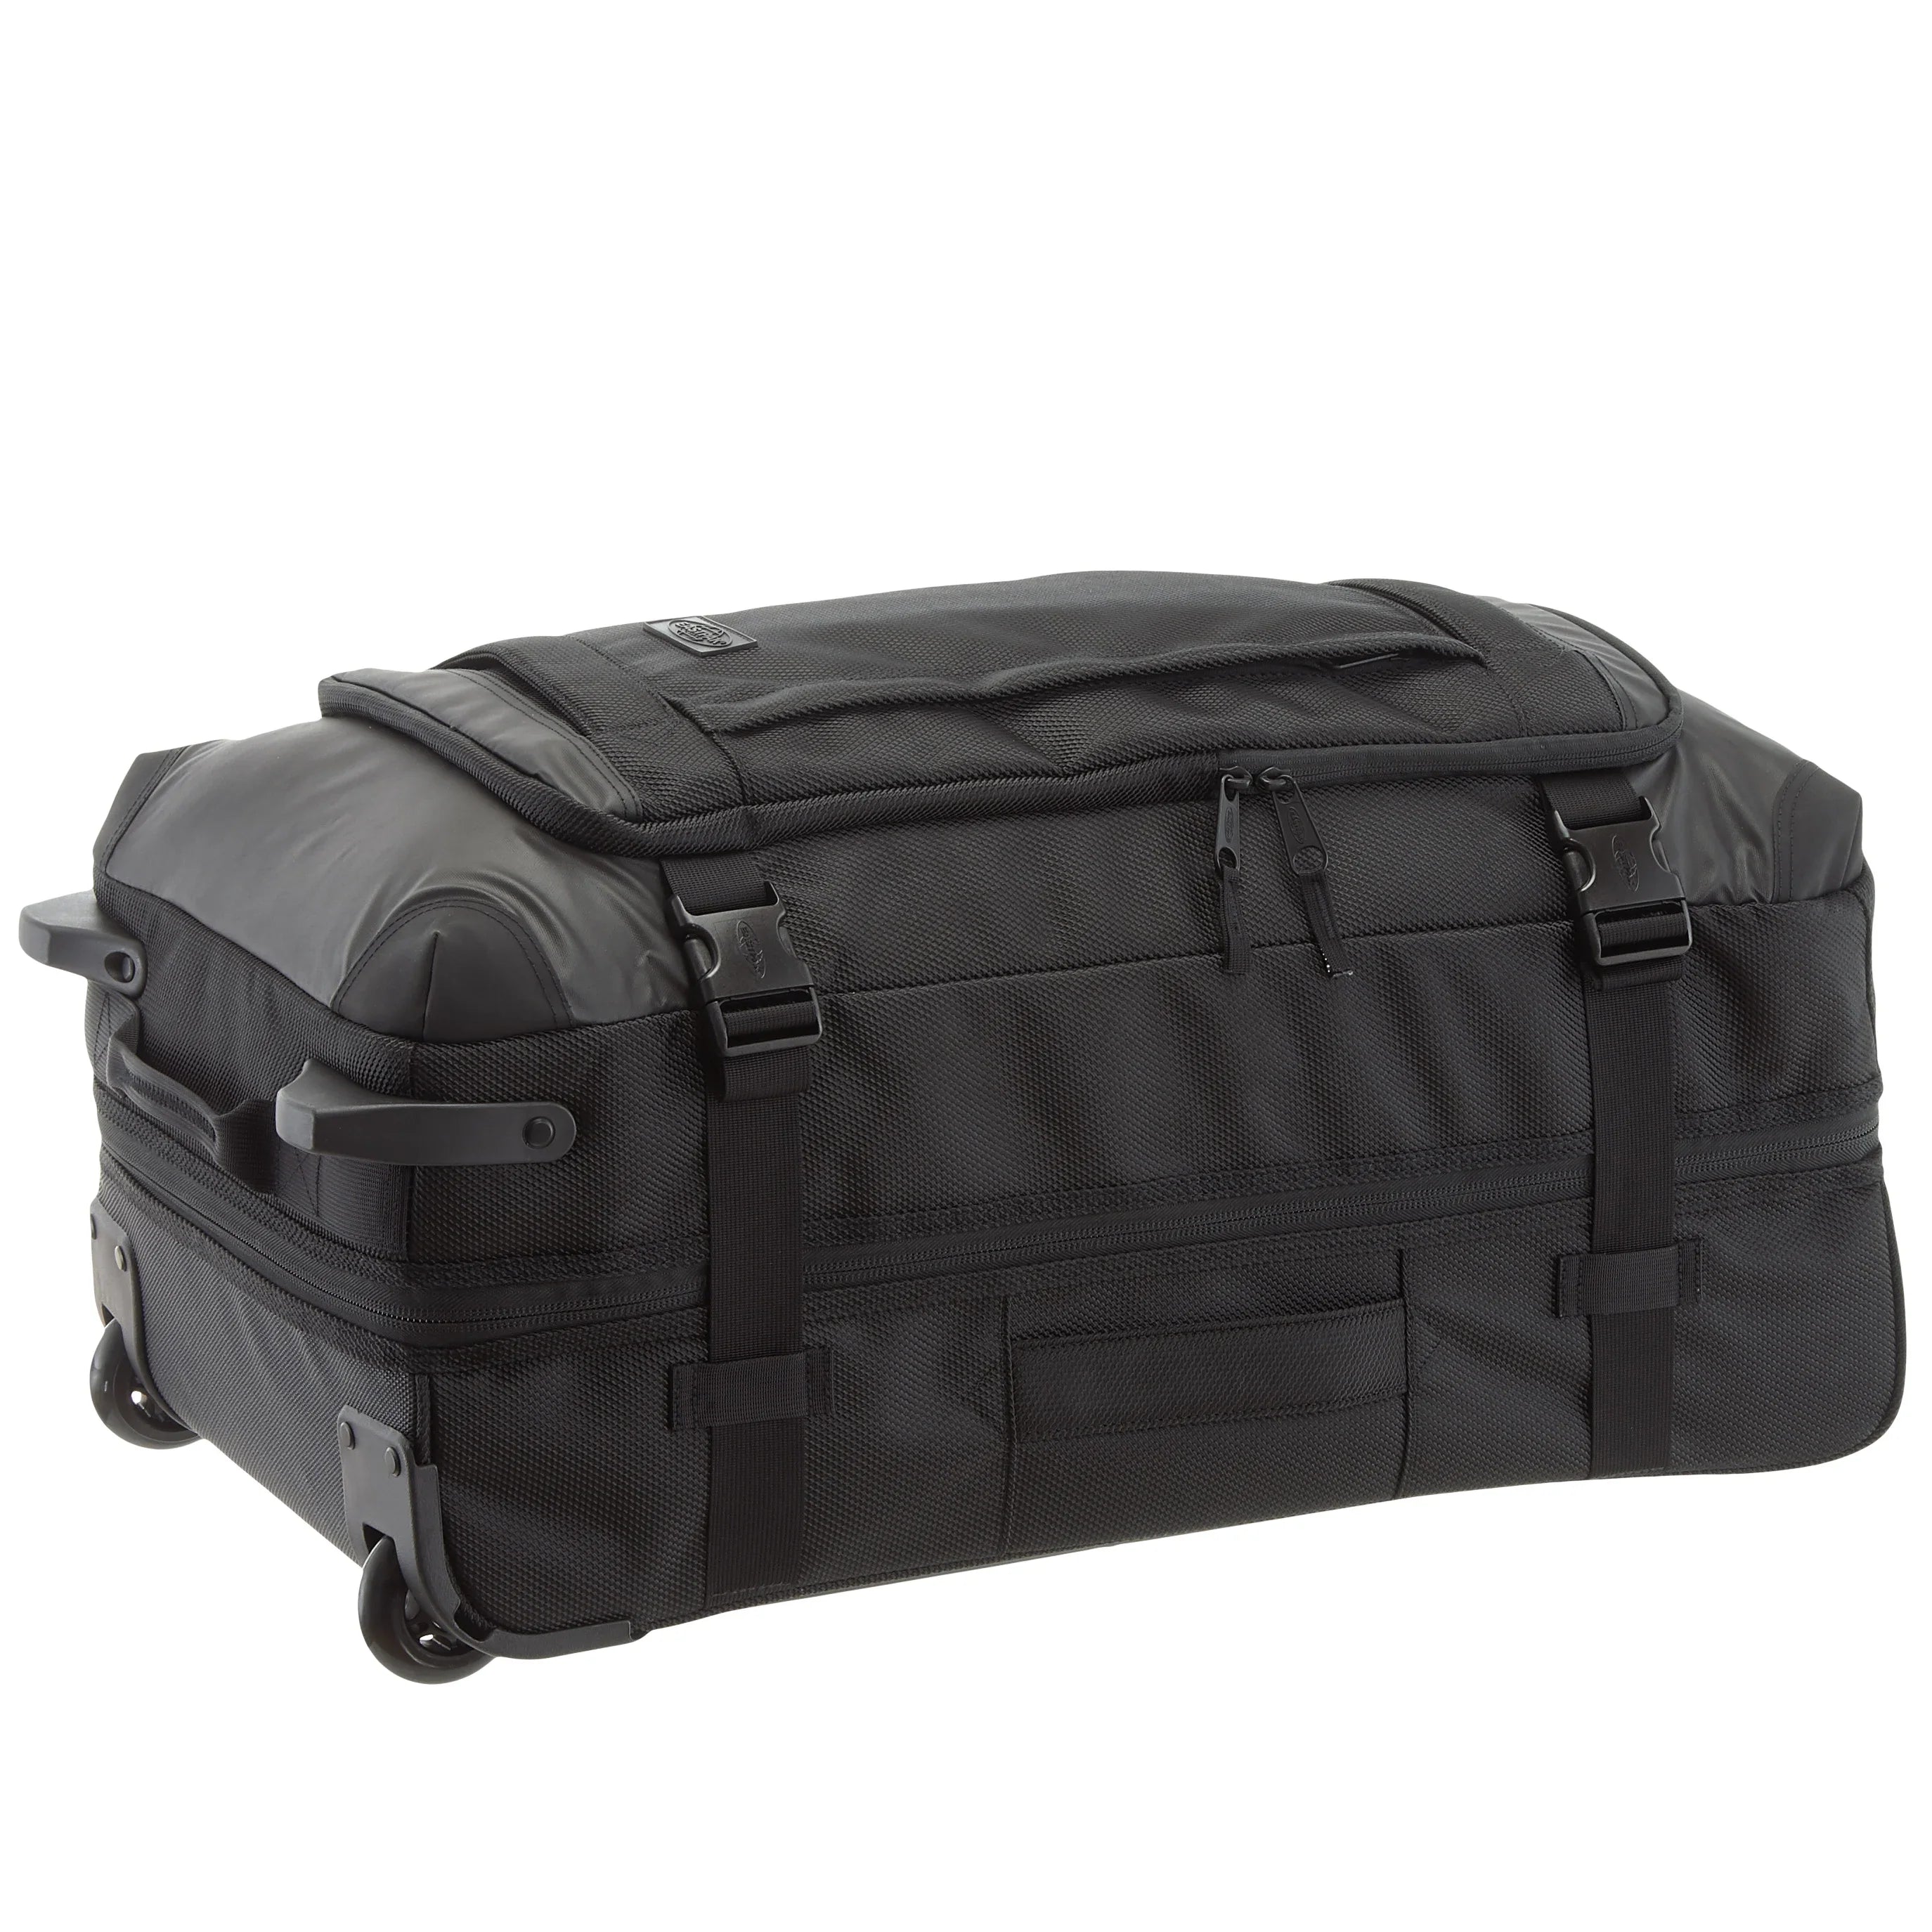 Eastpak Authentic Travel Tranverz CNNCT Rolling Travel Bag 67 cm - Accent Grey